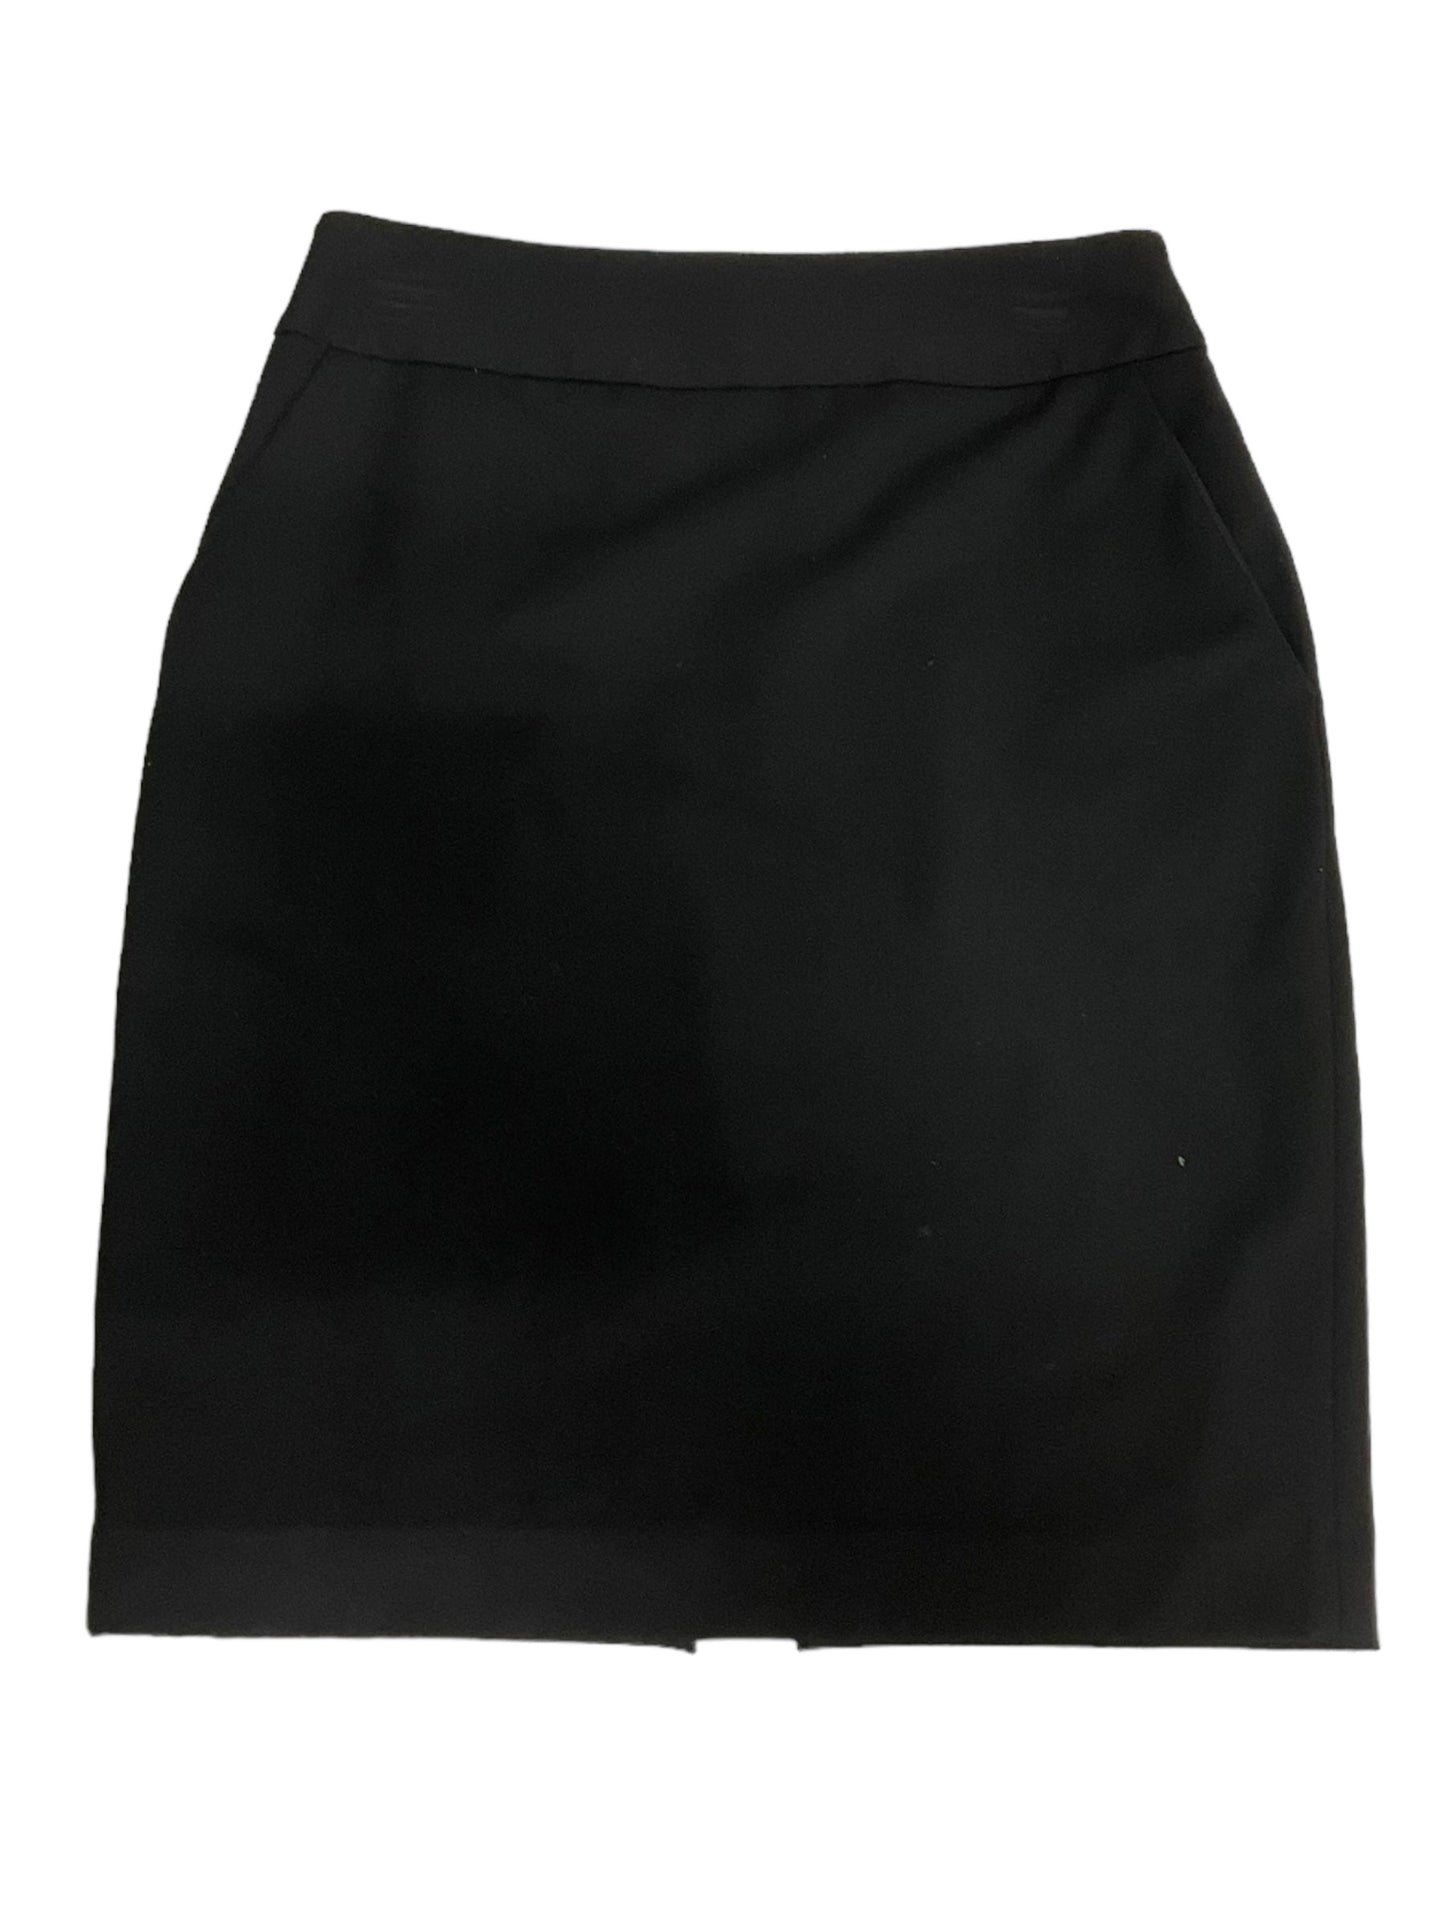 Black Skirt Midi Express, Size 6